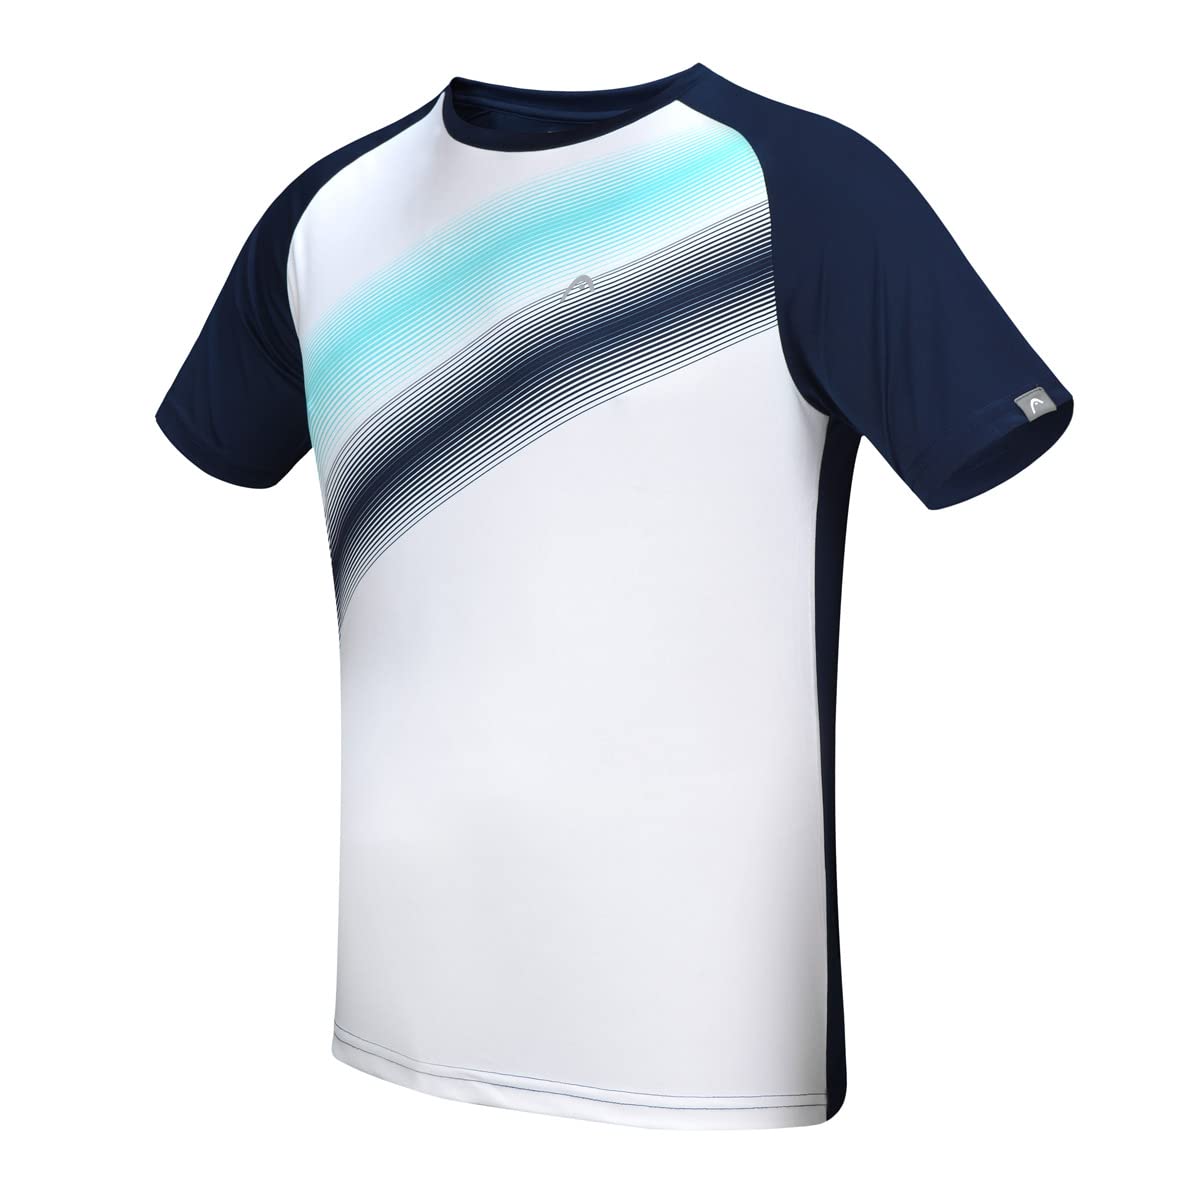 Head HCD-361 T-Shirt, Navy - Best Price online Prokicksports.com